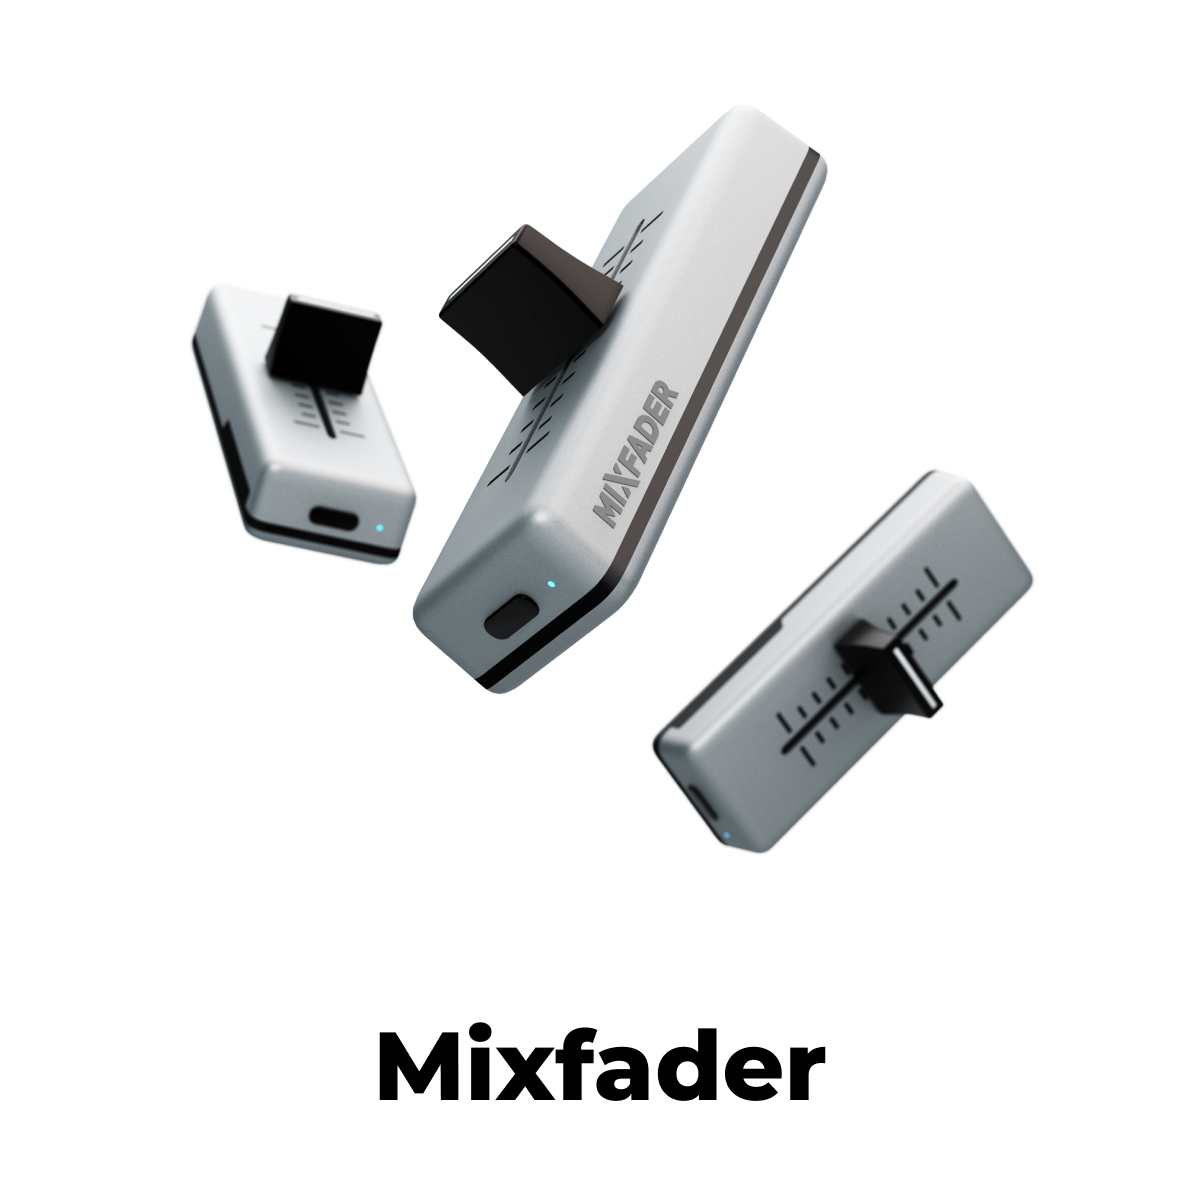 Multiple Mixfaders portable crossfader 